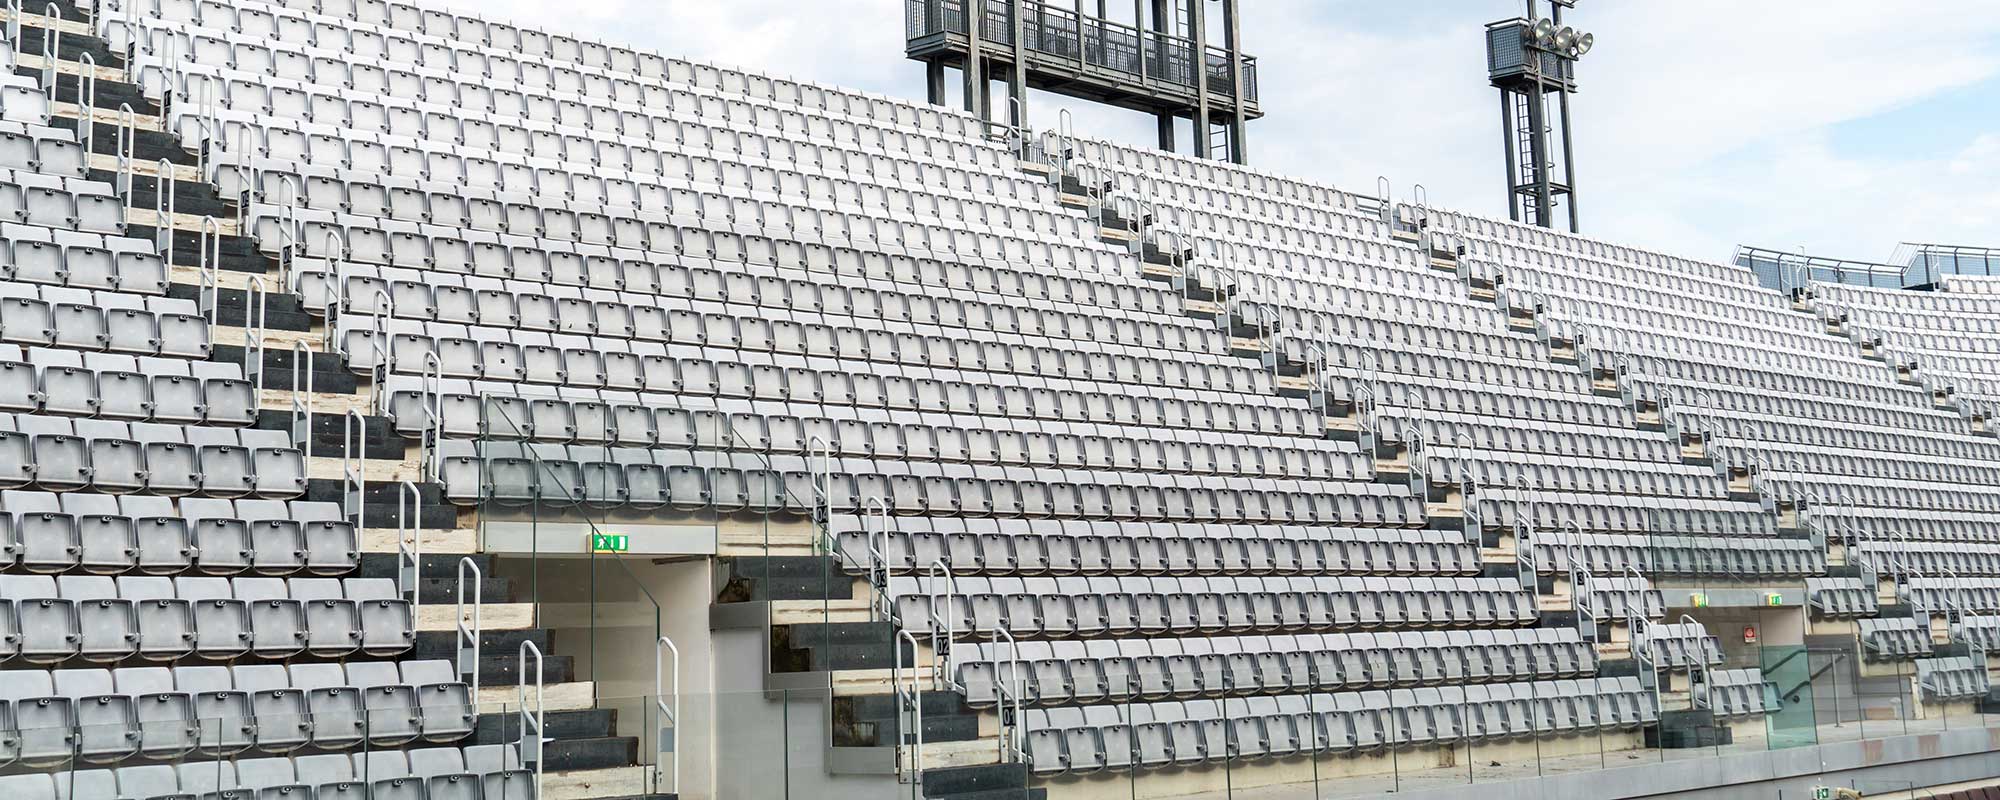 Outdoor Stadium Seating